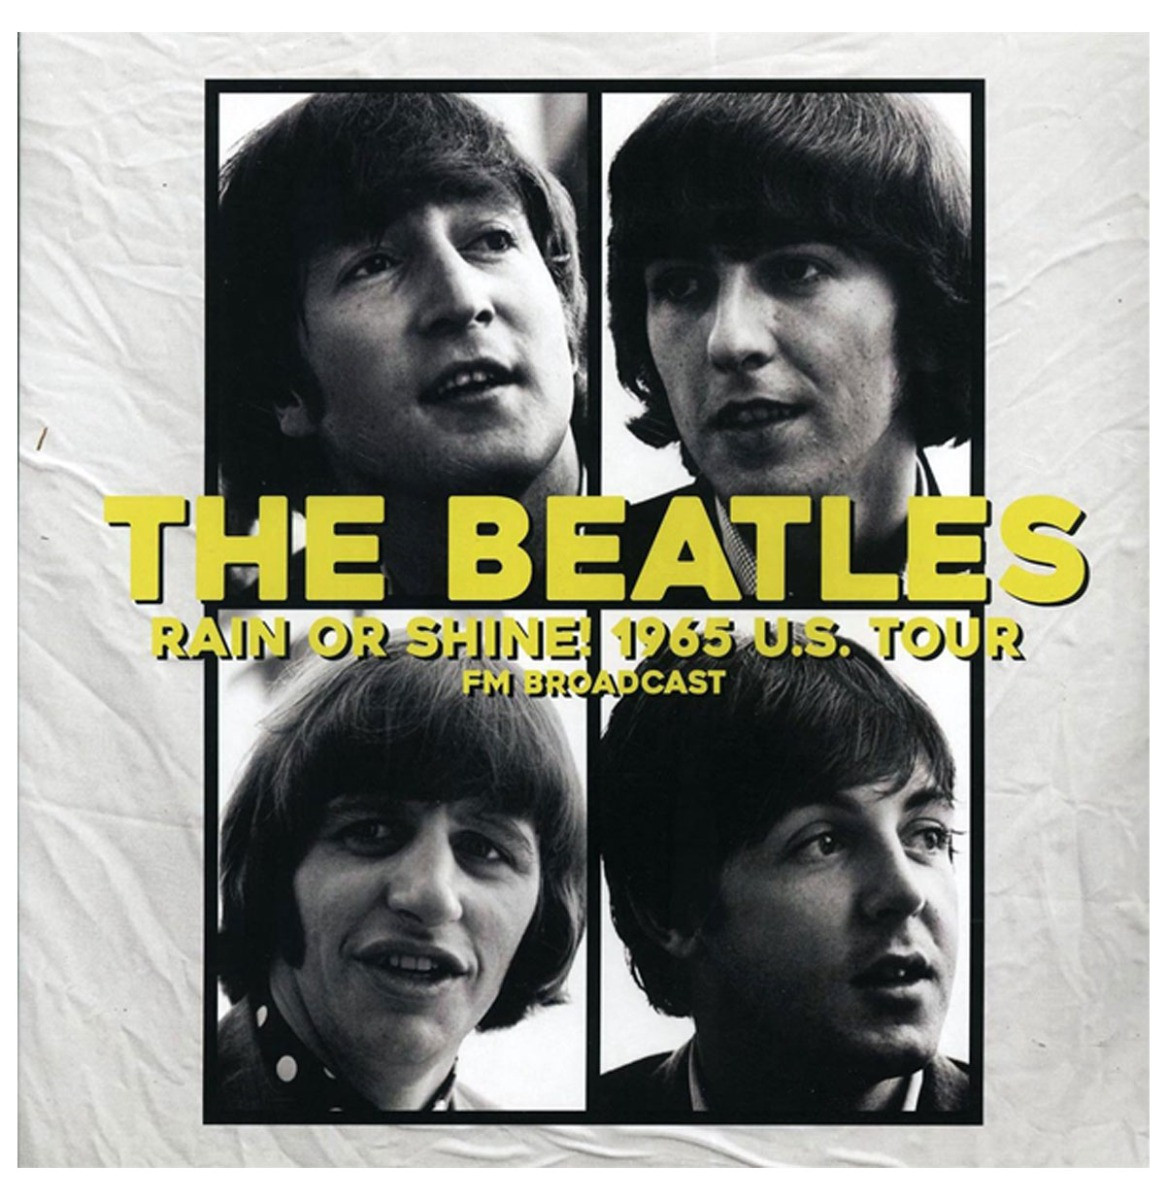 The Beatles - Rain Or Shine! 1965 U.S. Tour FM Broadcast LP